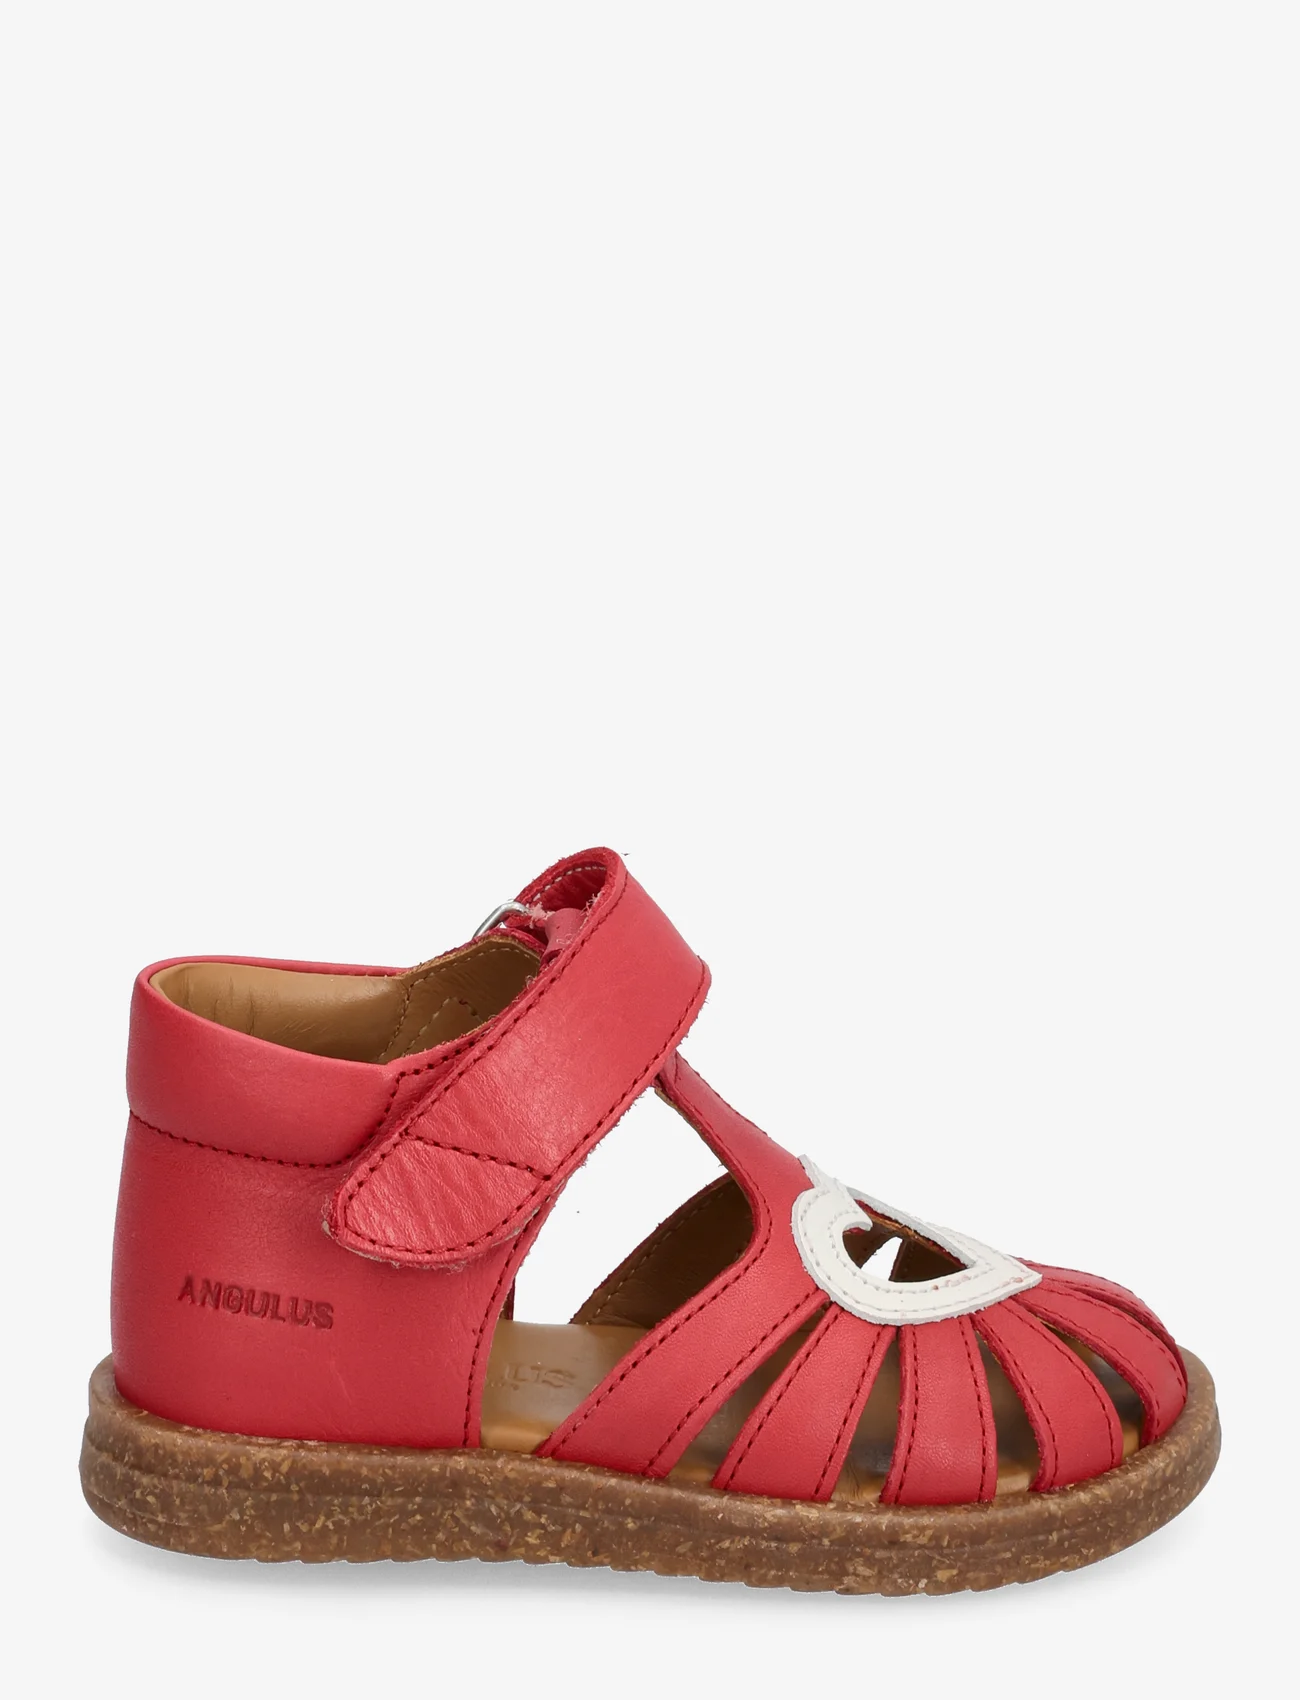 ANGULUS - Sandals - flat - closed toe - - sandaler - 1731/1493 red/off white - 1